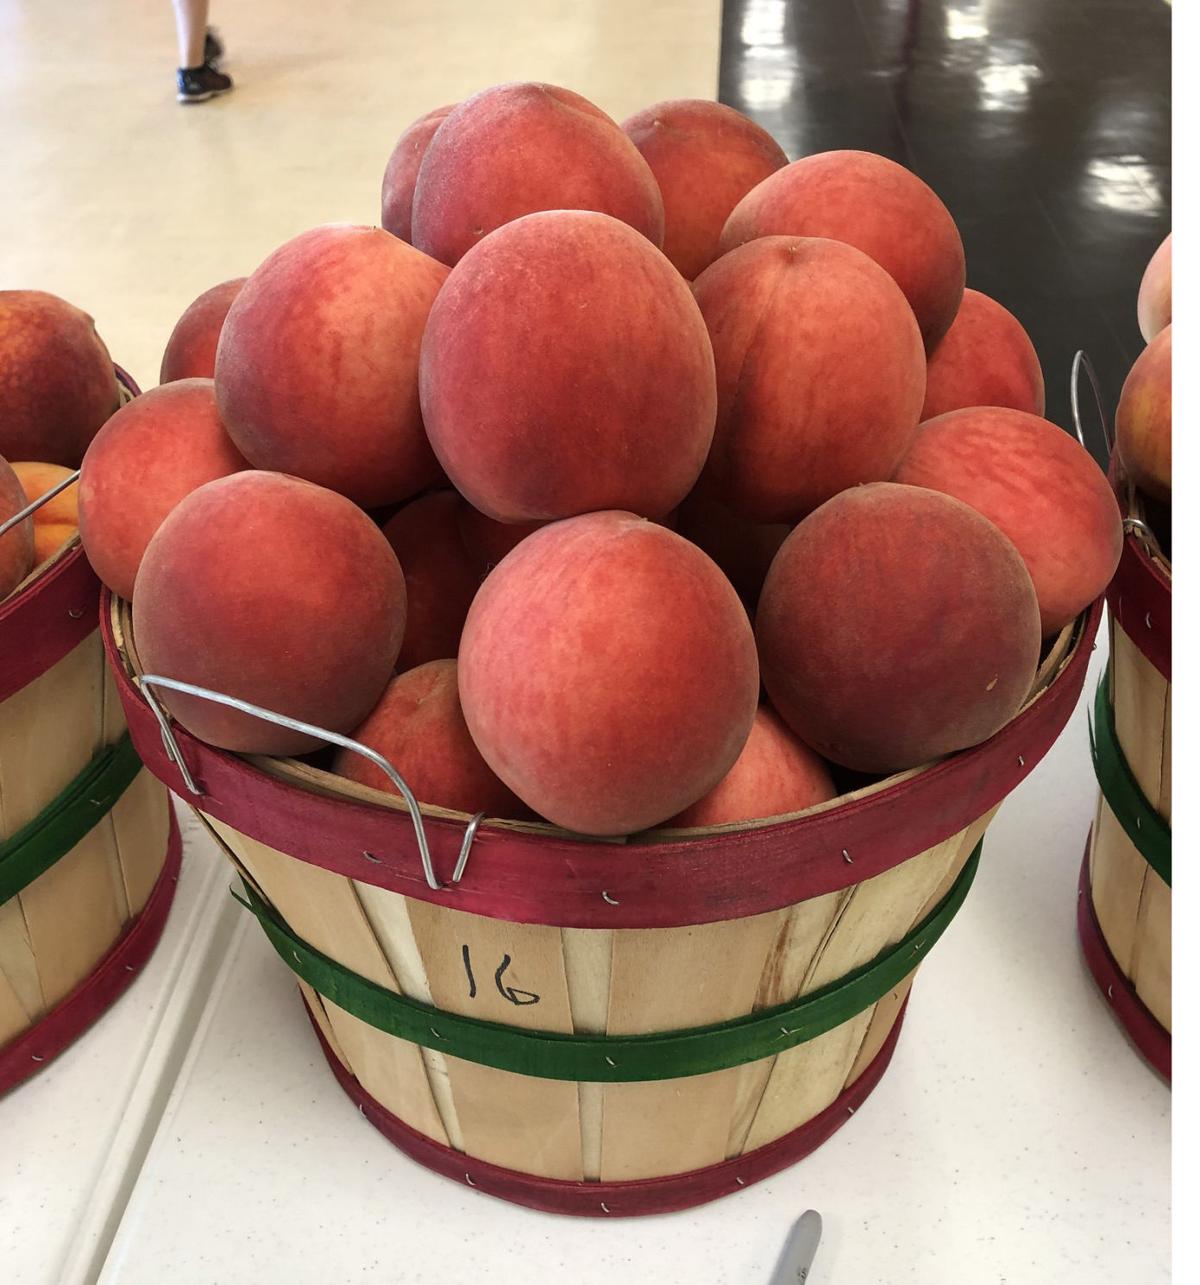 Arkansas peach variety wins top prize at Alabama festival | Business | magnoliareporter.com